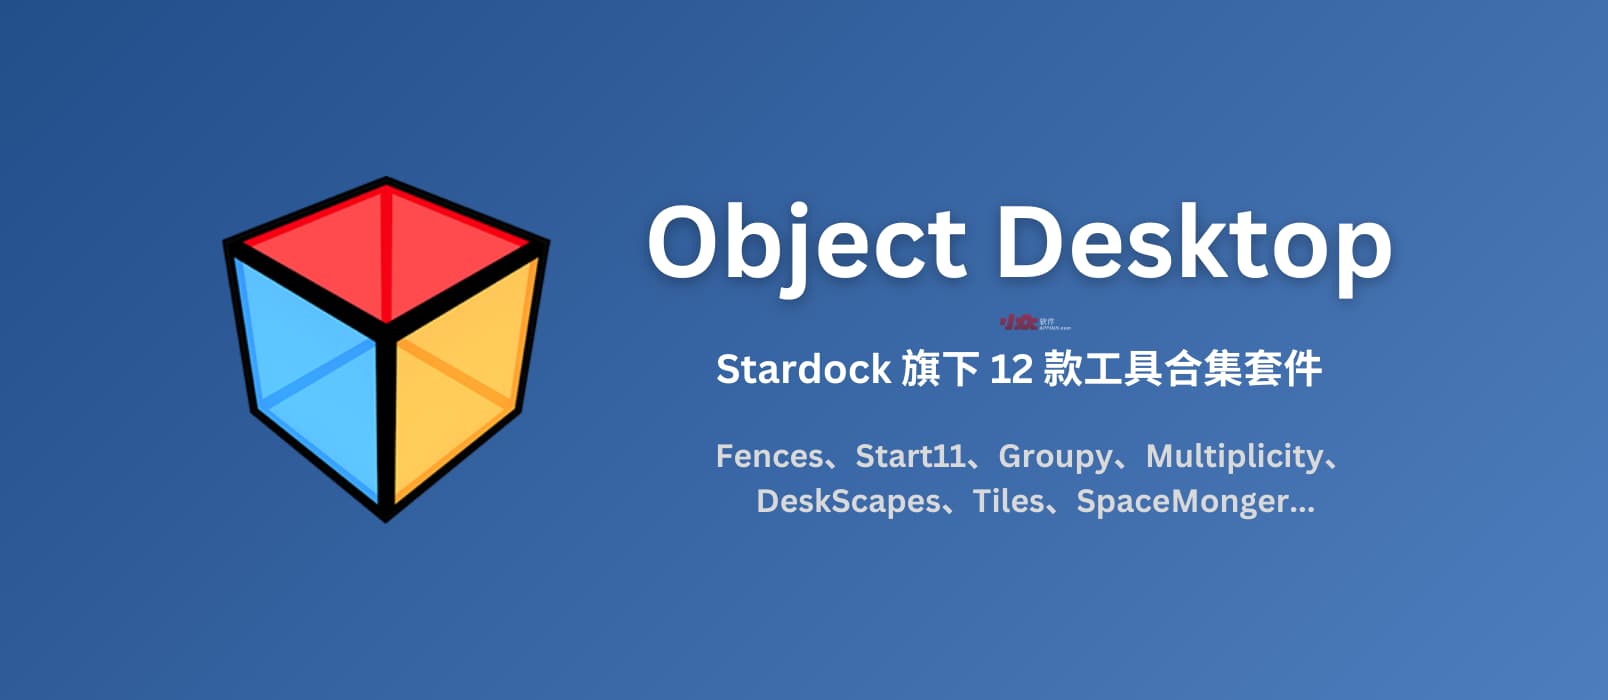 Object Desktop - Windows 生产力和个性化套件：包括 Fences、Start11 等 Stardock 旗下 12 款工具 1